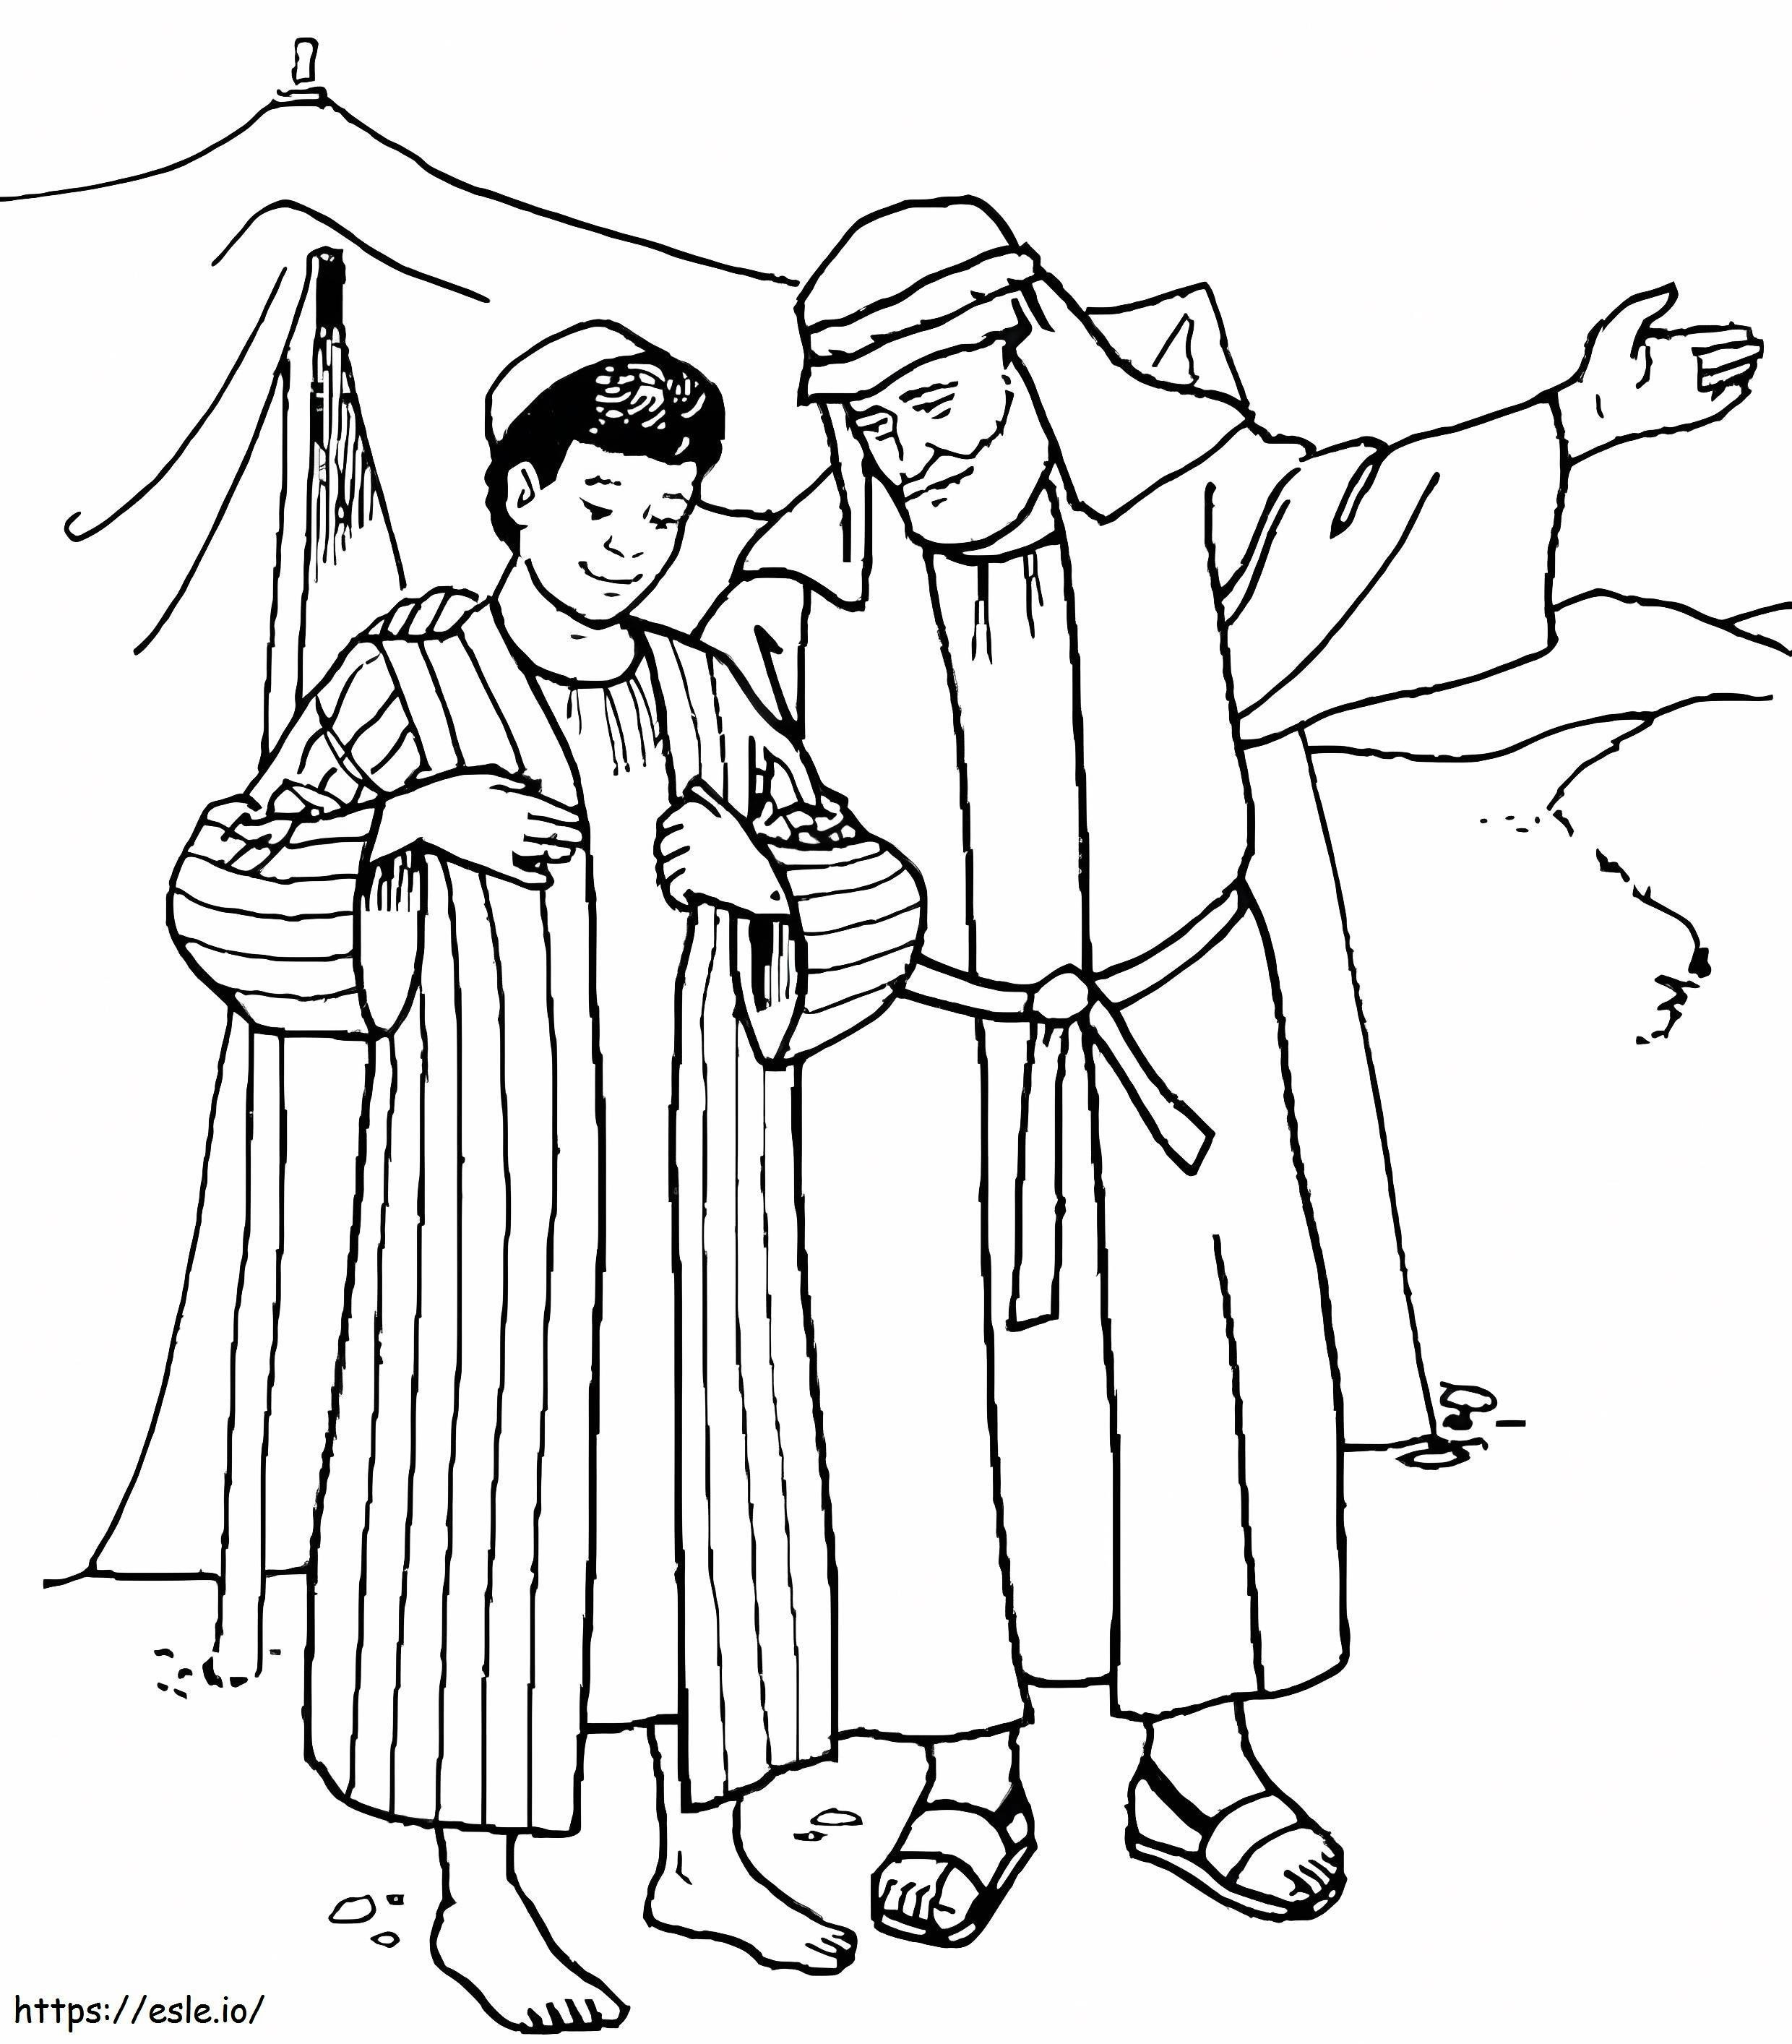 Joseph Son Of Jacob coloring page